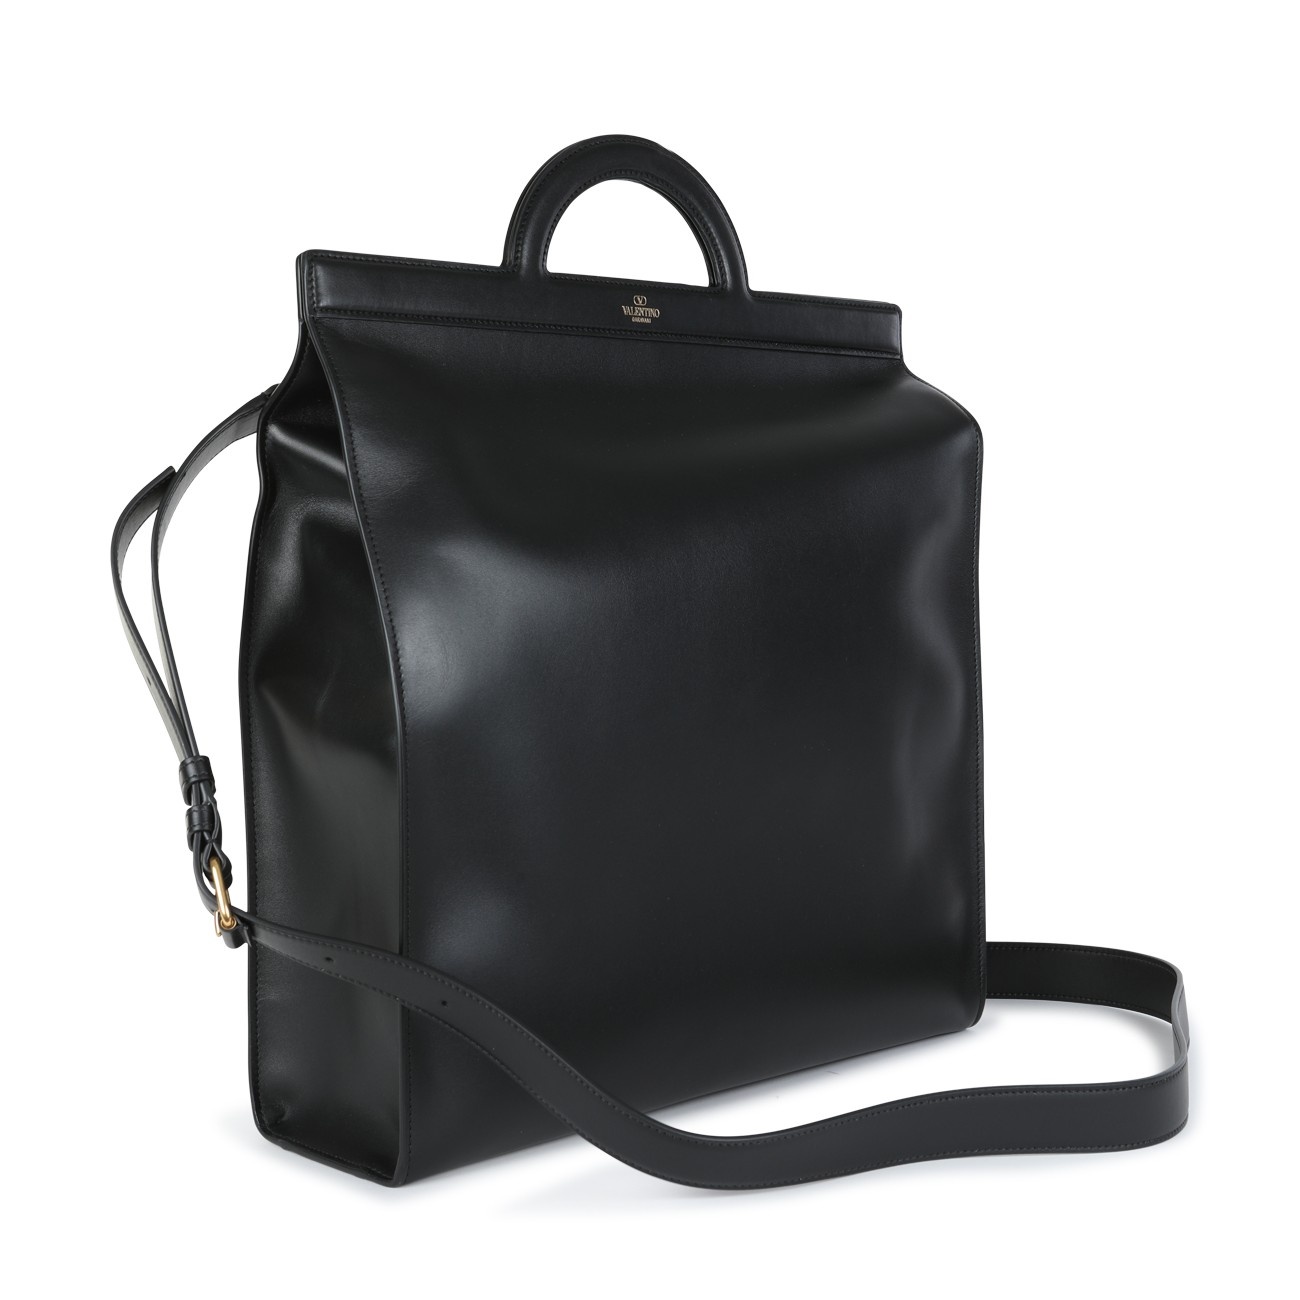 black leather tote bag - 2